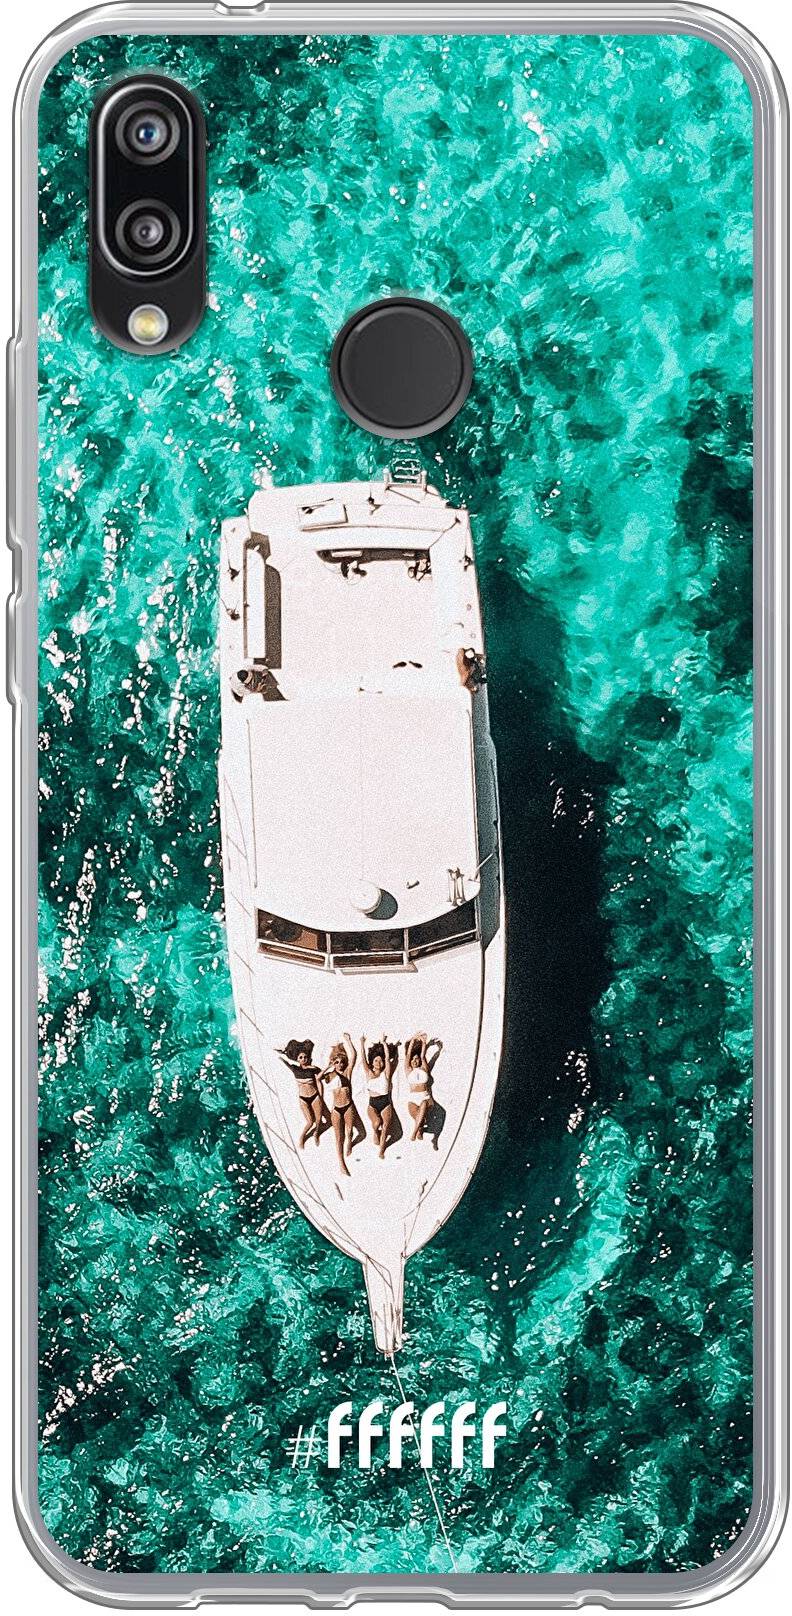 Yacht Life P20 Lite (2018)